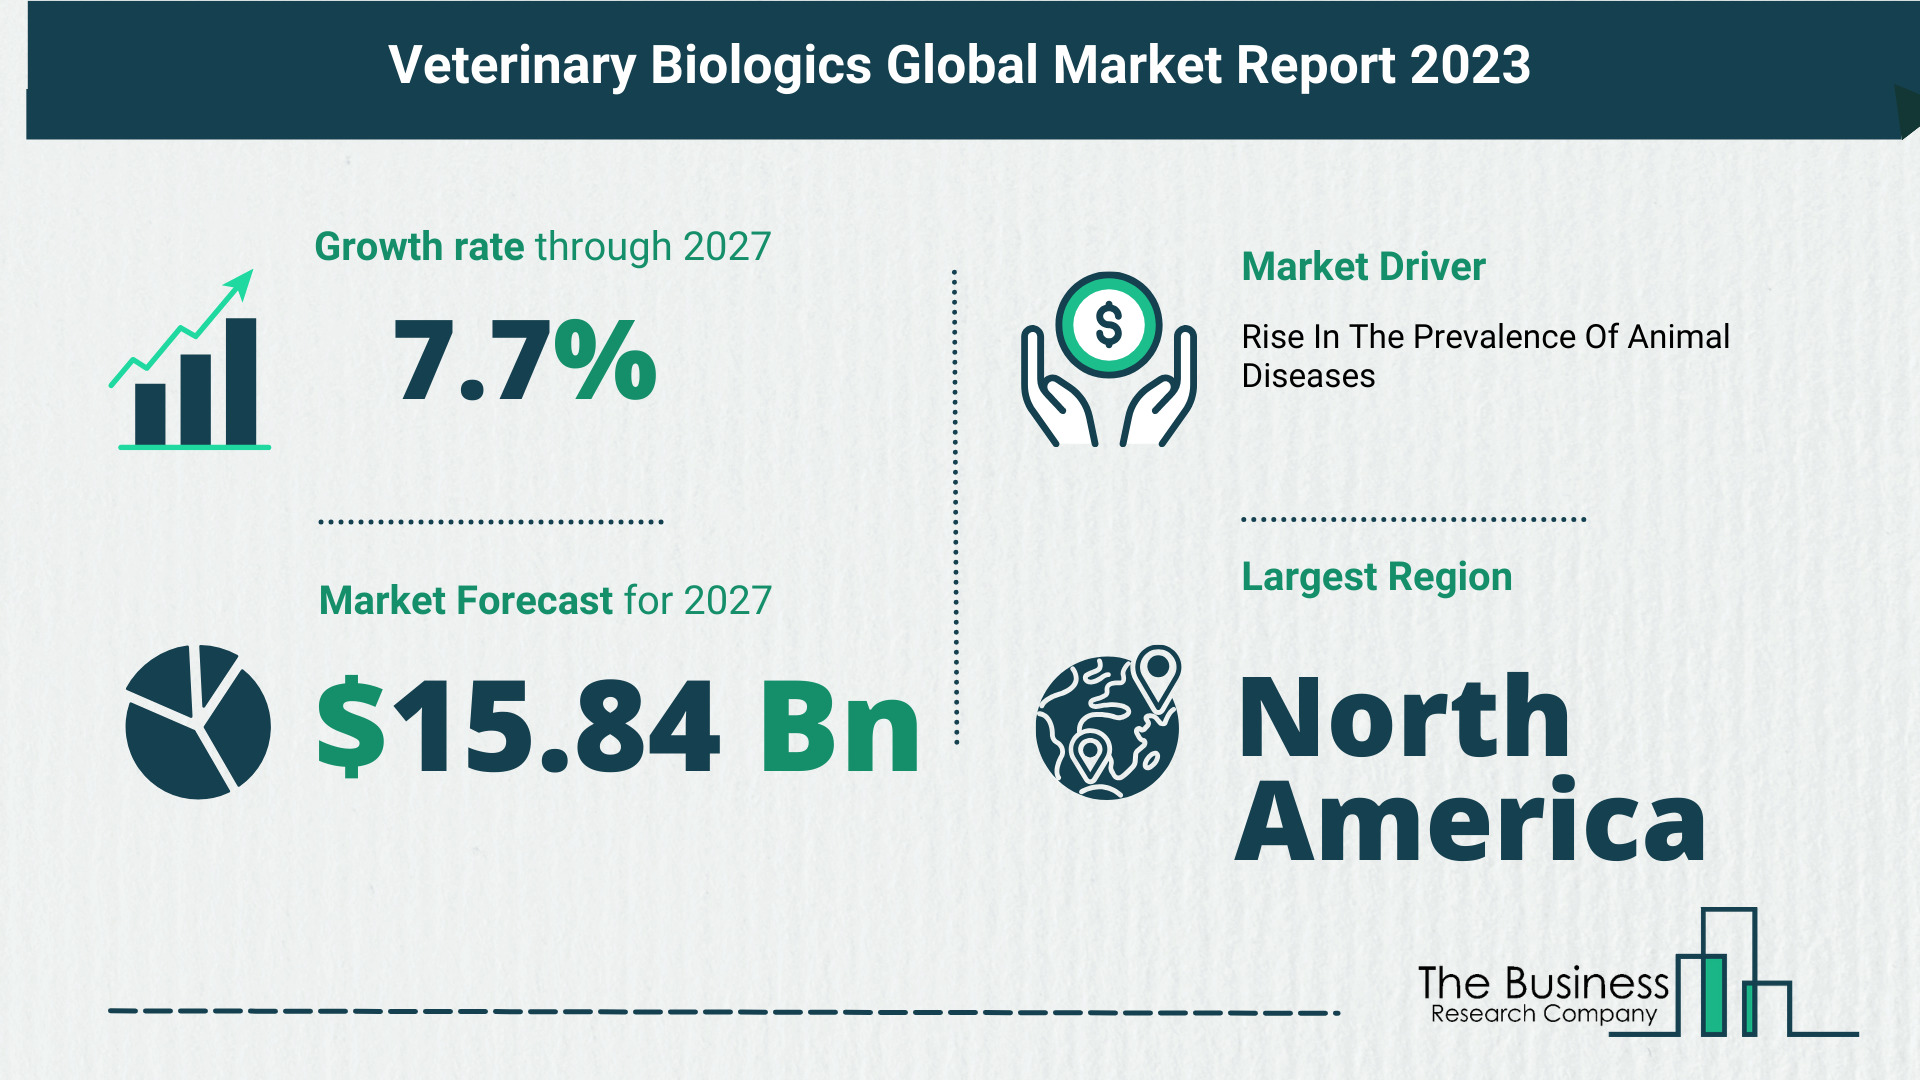 Global Veterinary Biologics Market